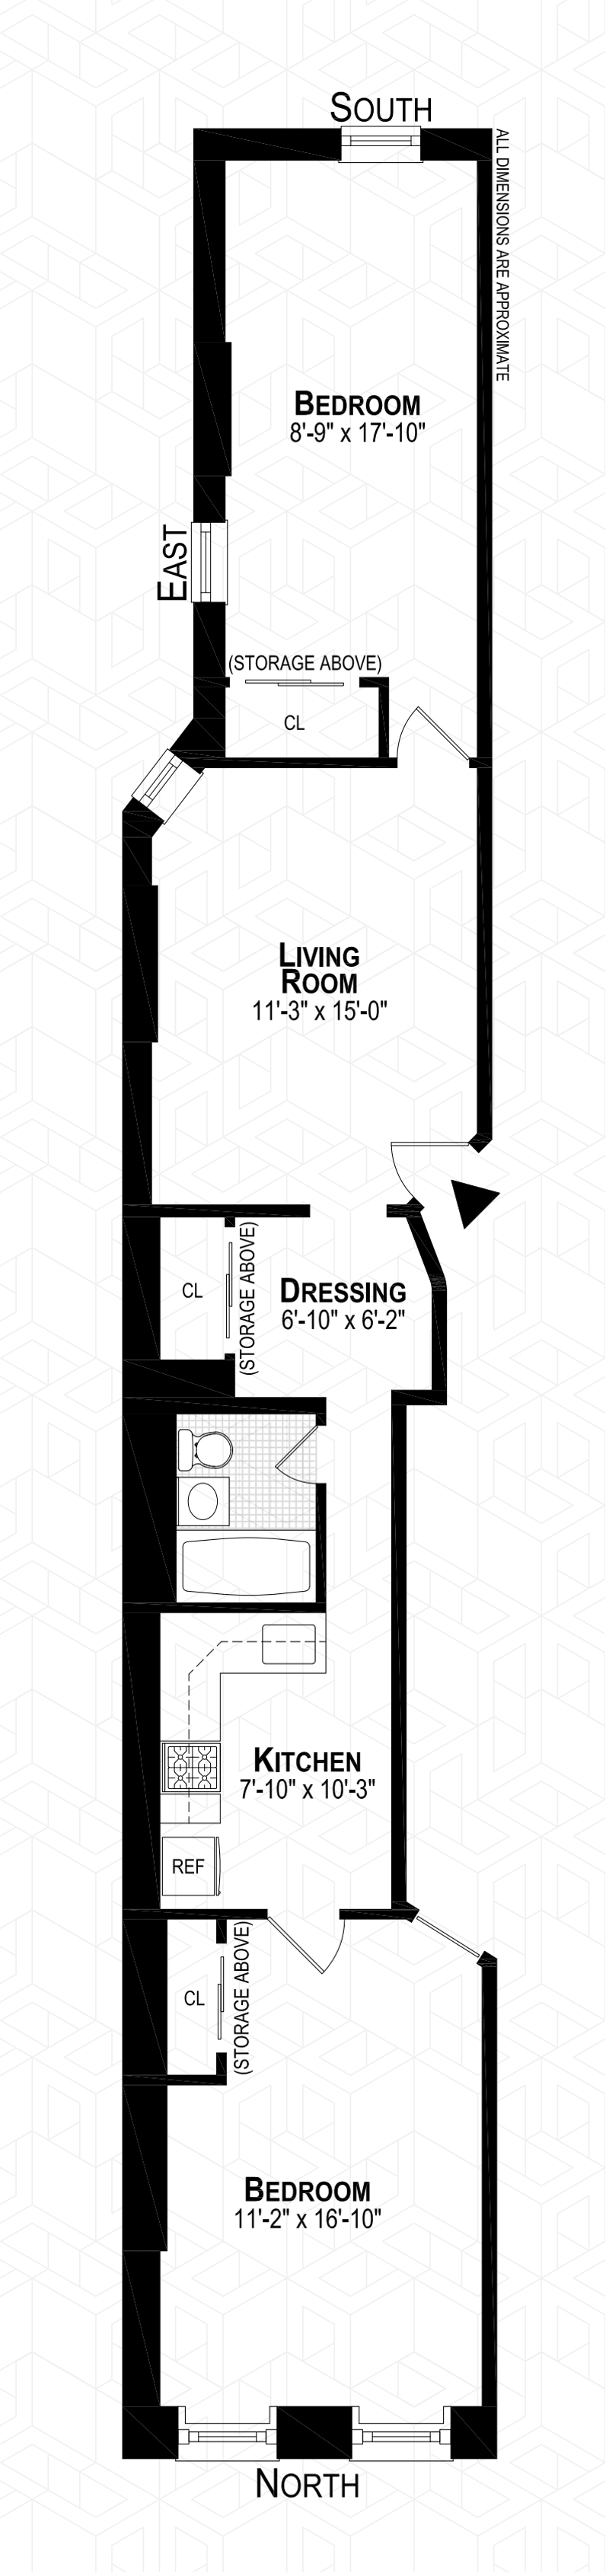 Floorplan for 108 West 17th Street, 7